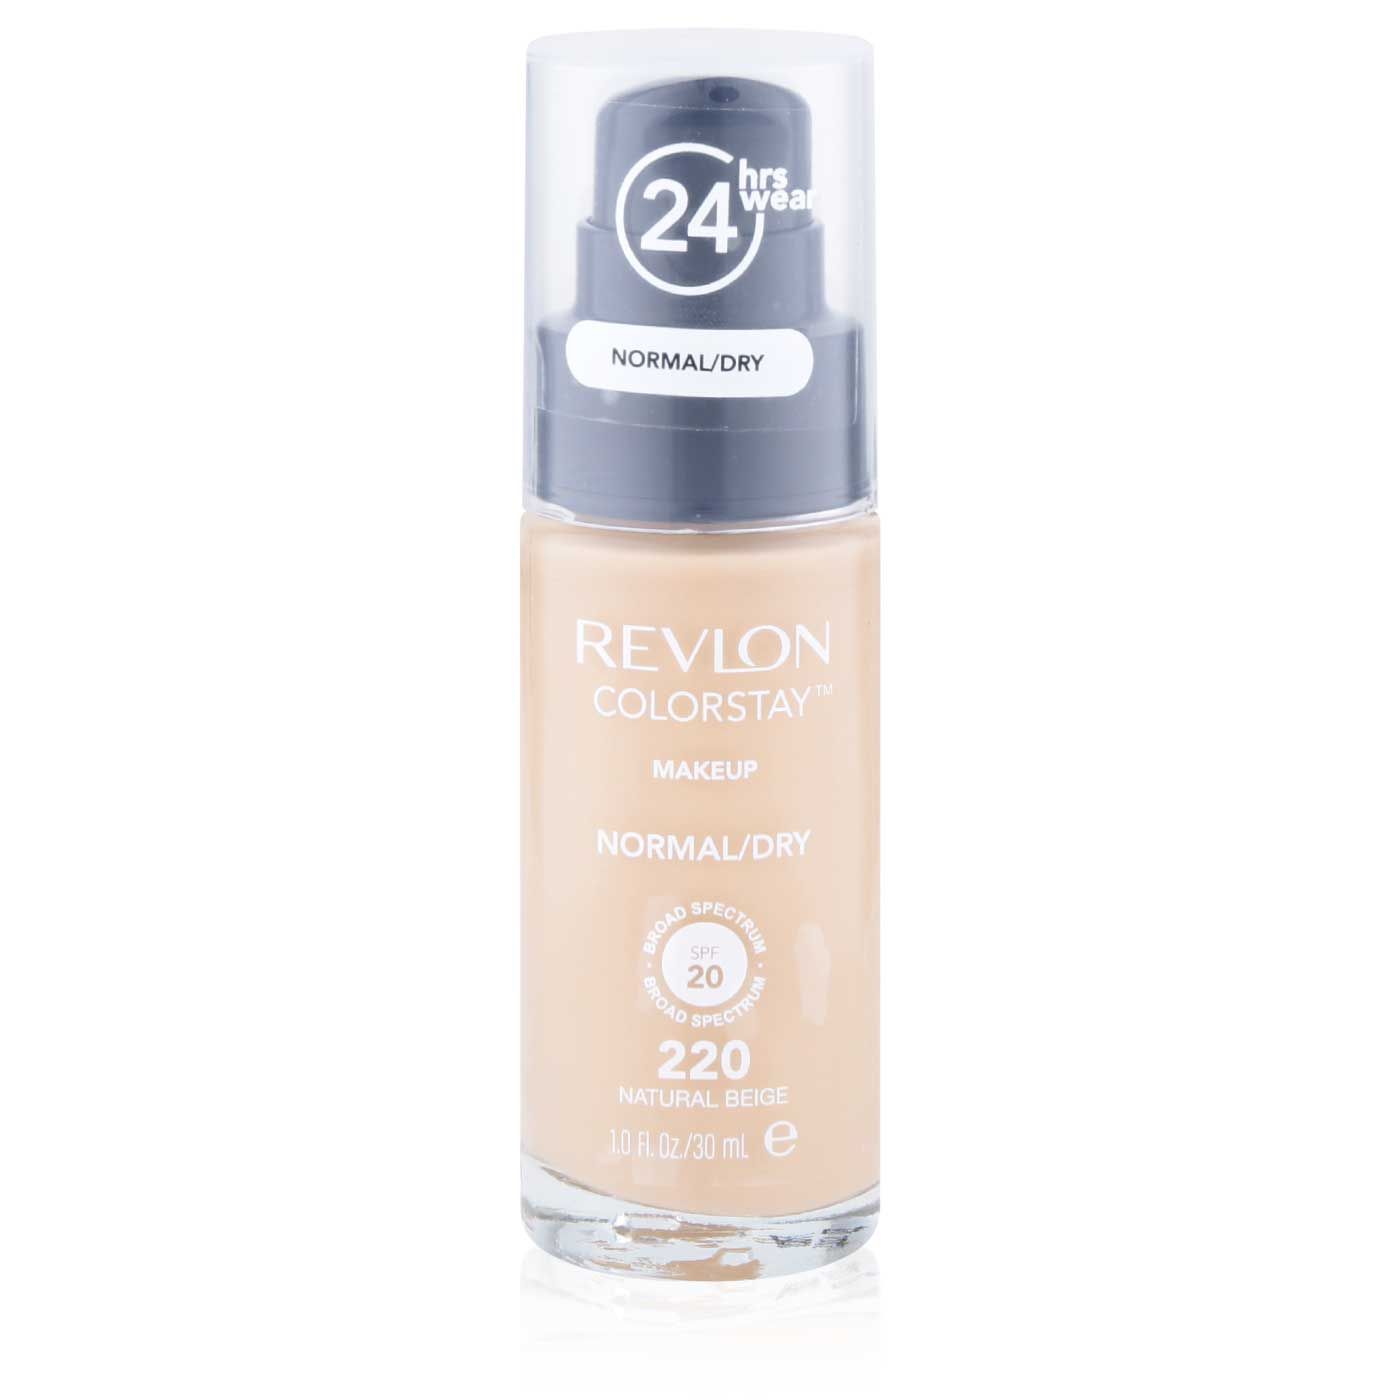 Revlon Colorstay Makeup Normal/Dry Natural Beige w/ Pump - 1